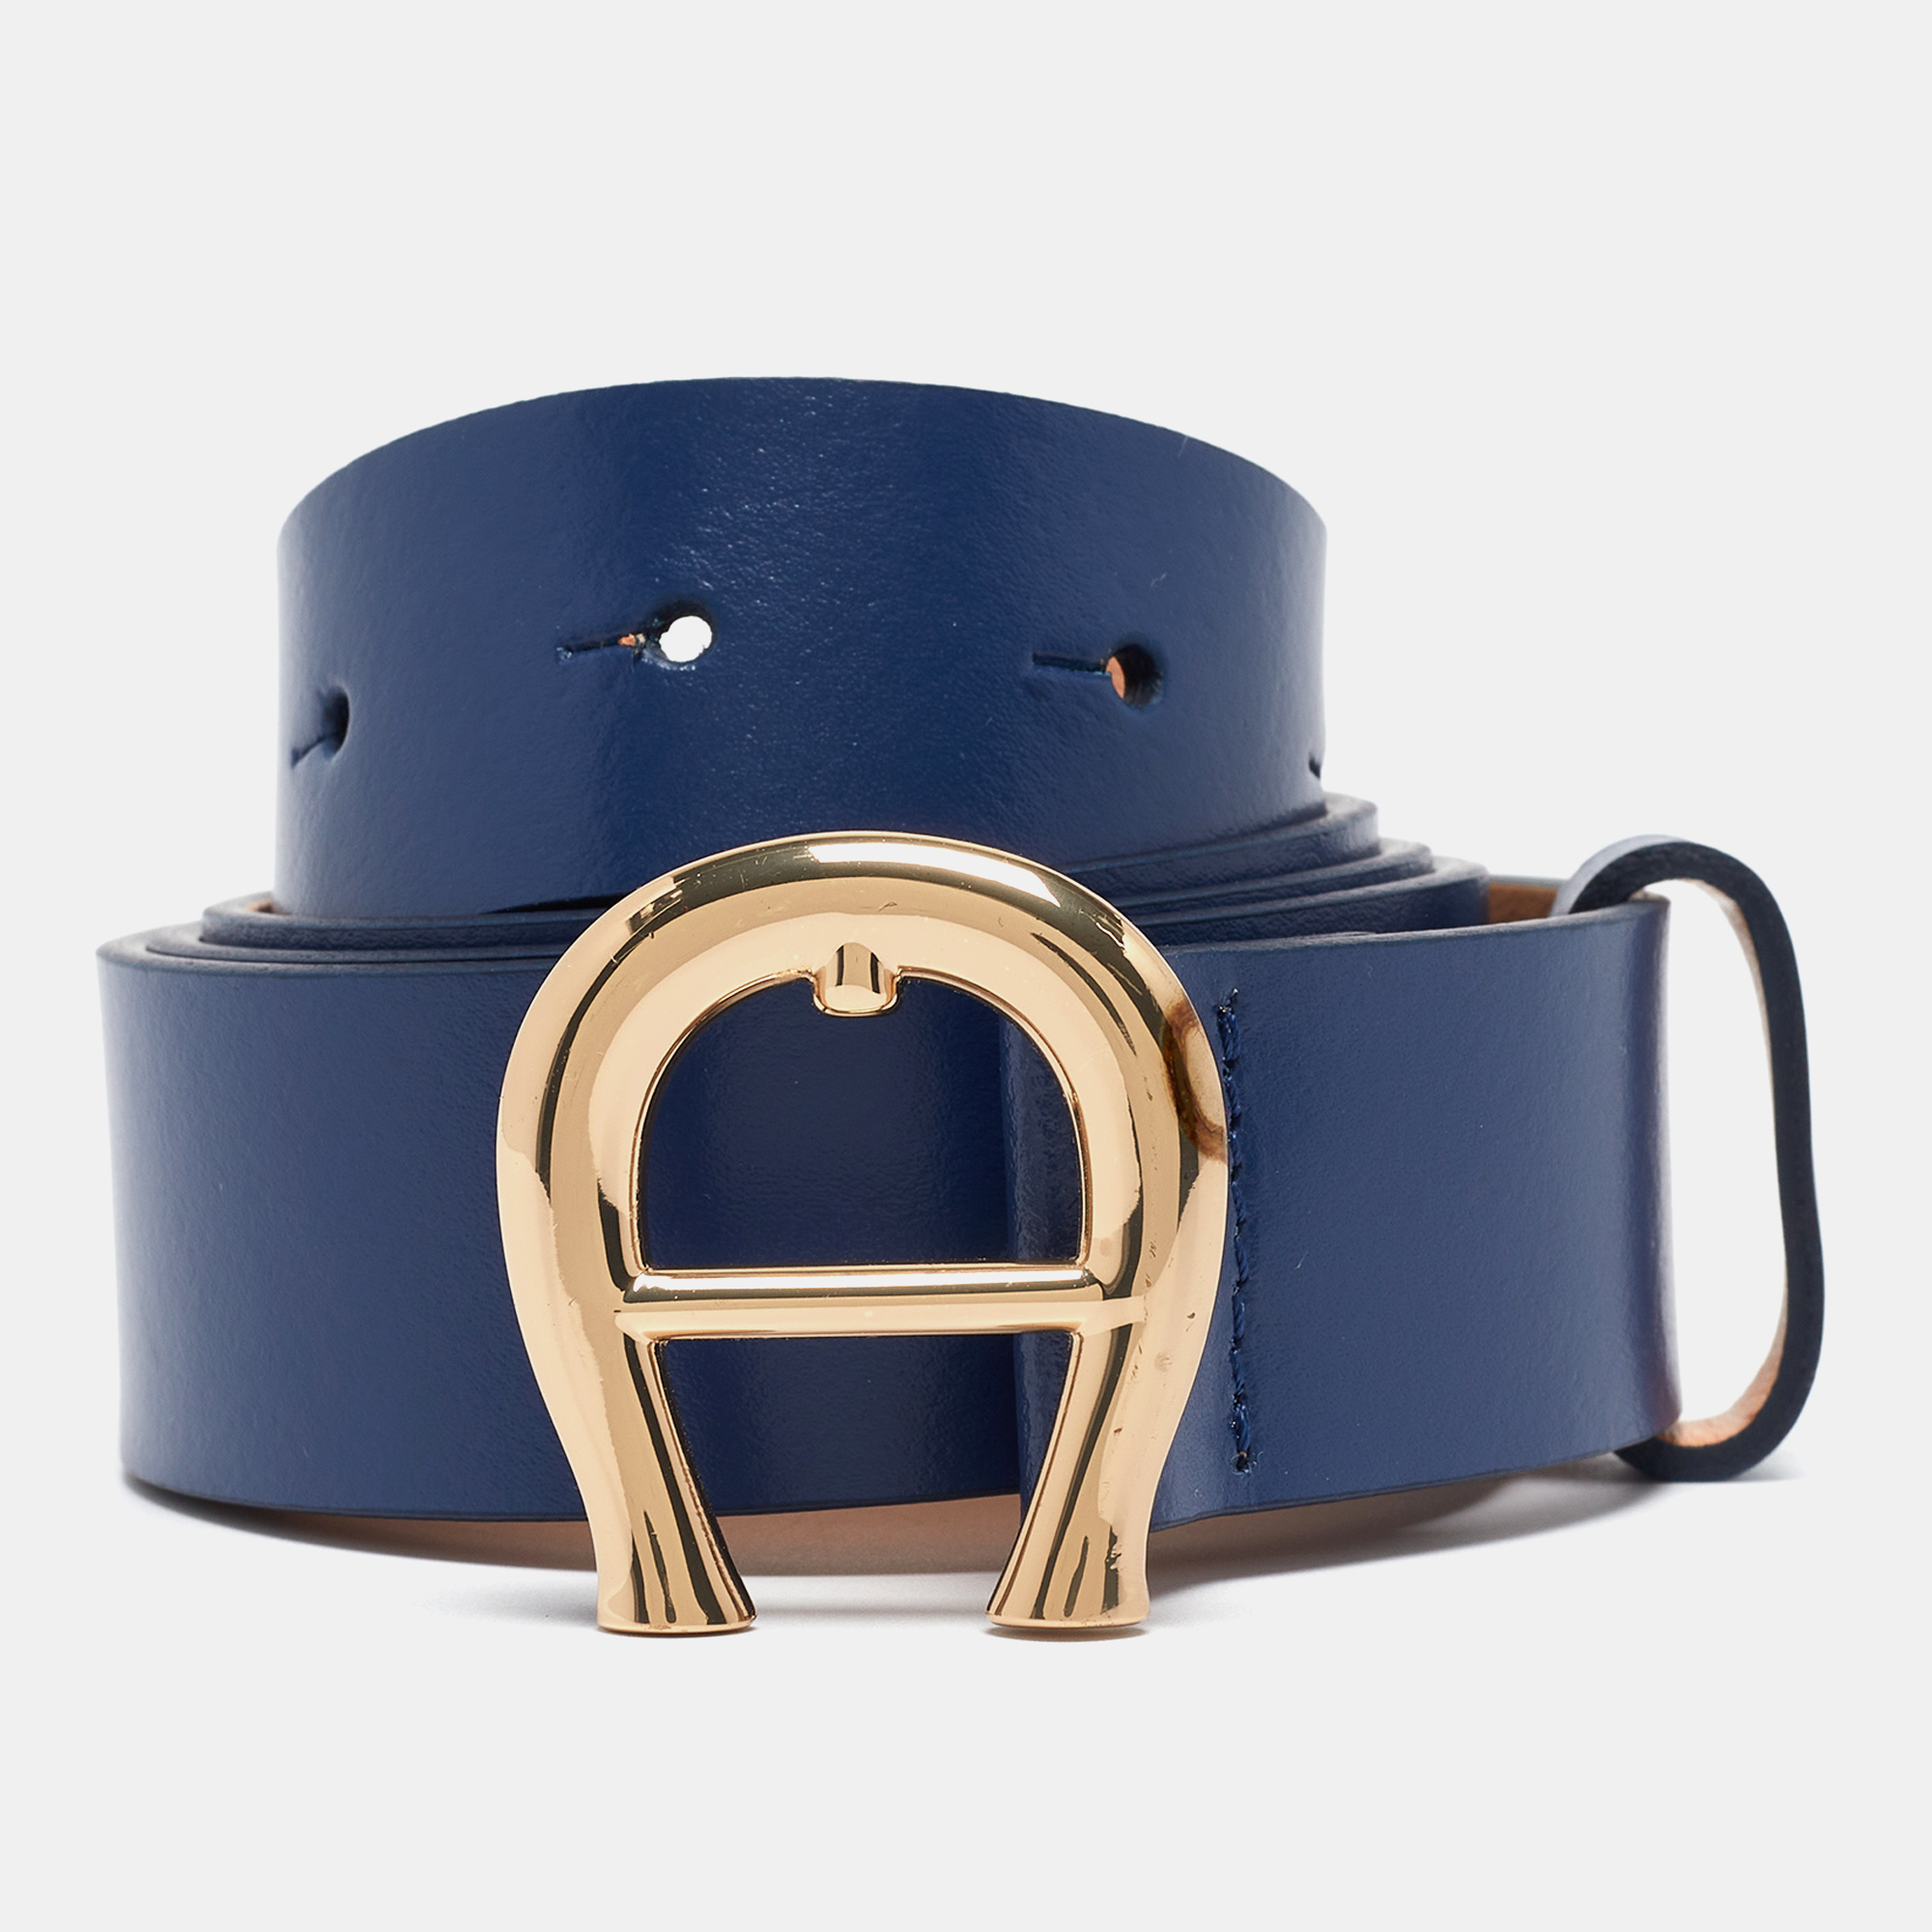 Aigner blue leather logo buckle belt 95cm